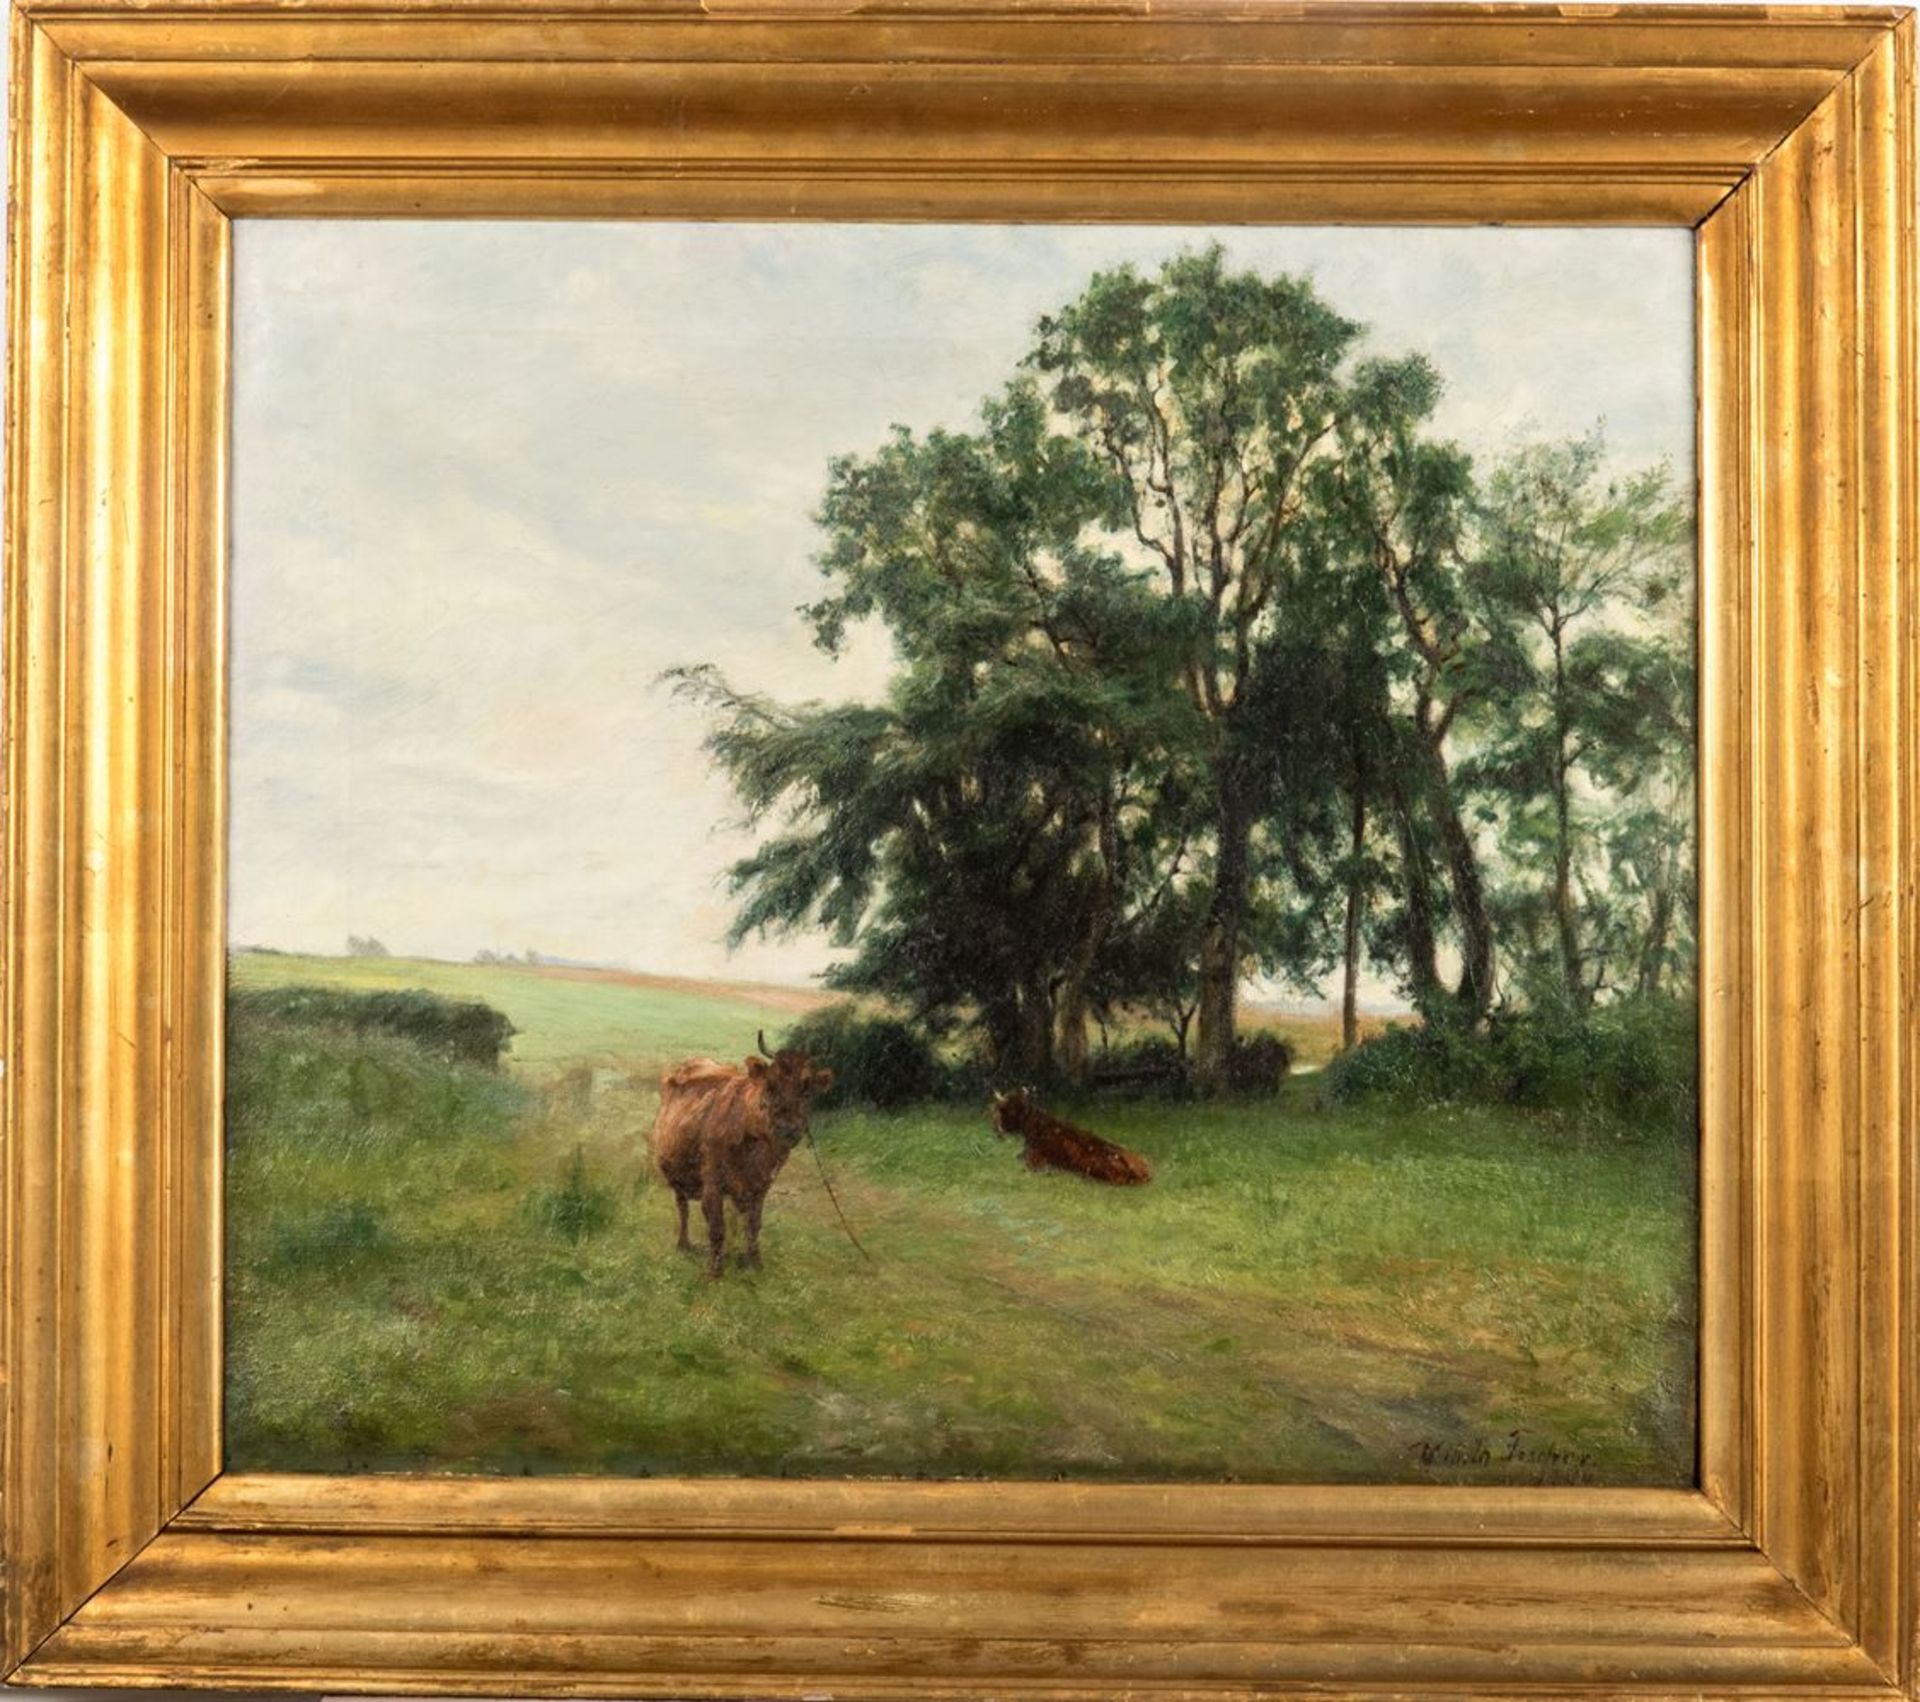 Fischer, Vihelm, Theodor (1857-1928) Dänischer MalerOel/Leinwand. Landschaft mit Kühen. Rechts unten